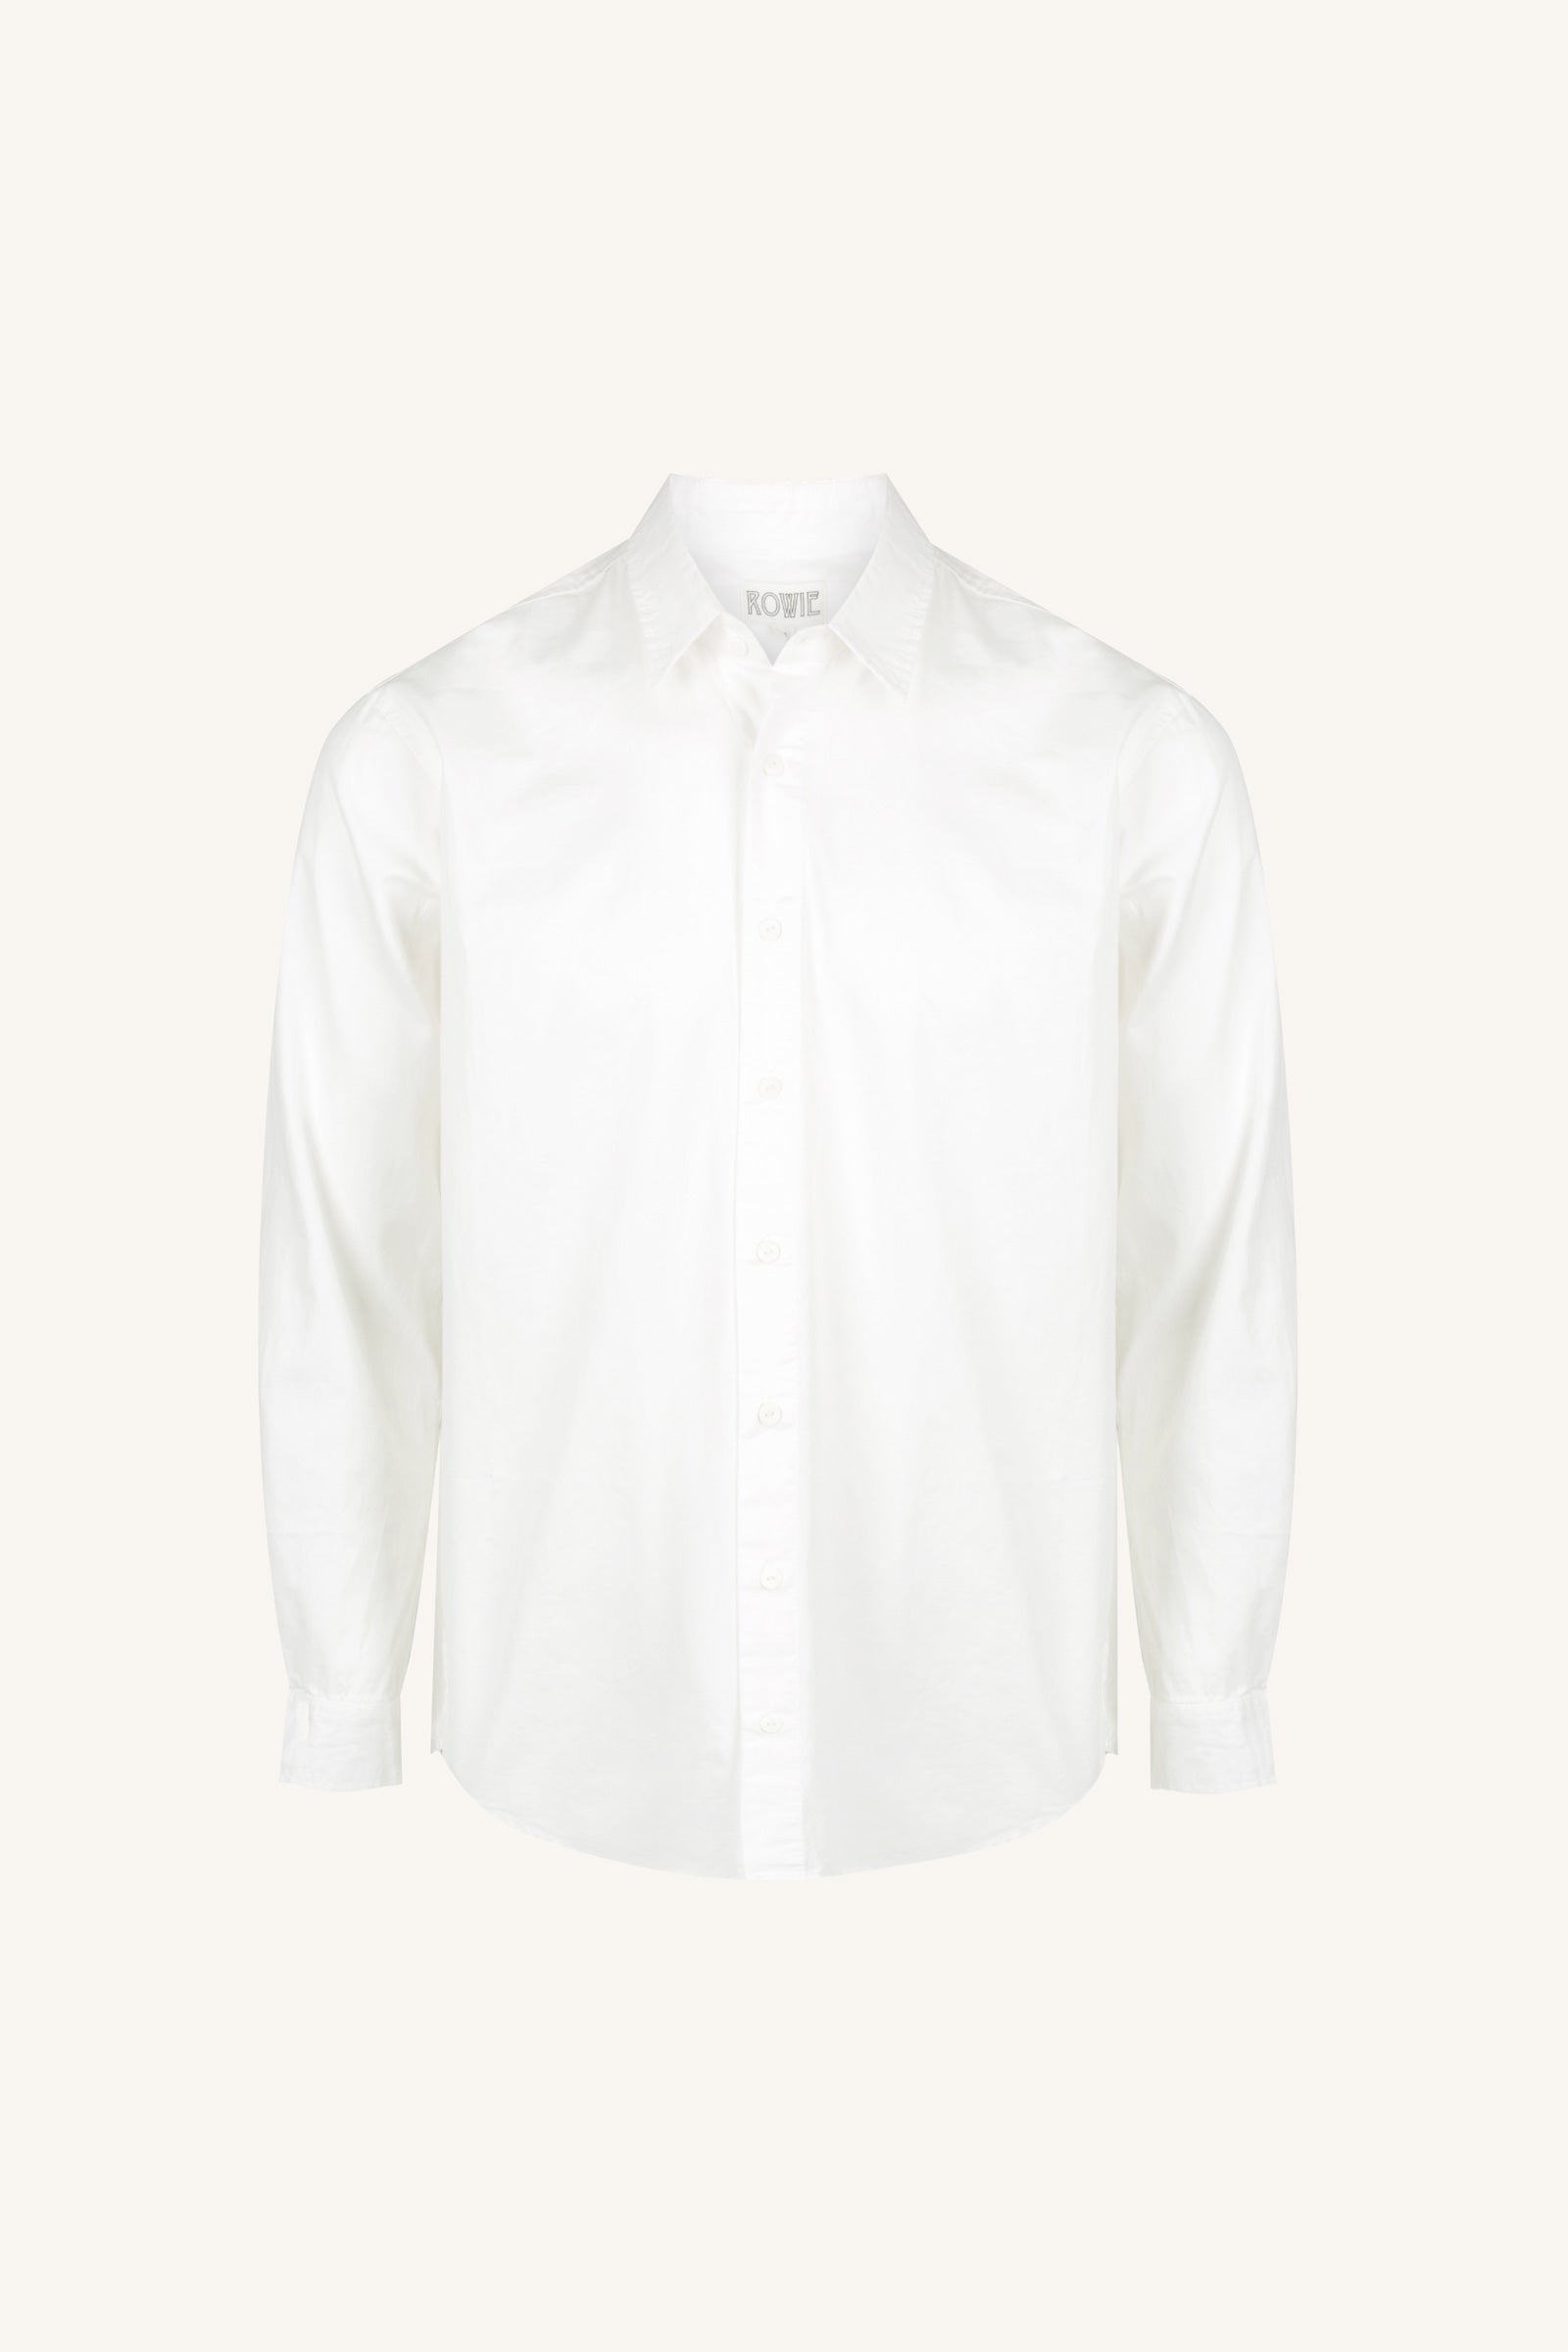 Kaine Organic Long Sleeve Shirt